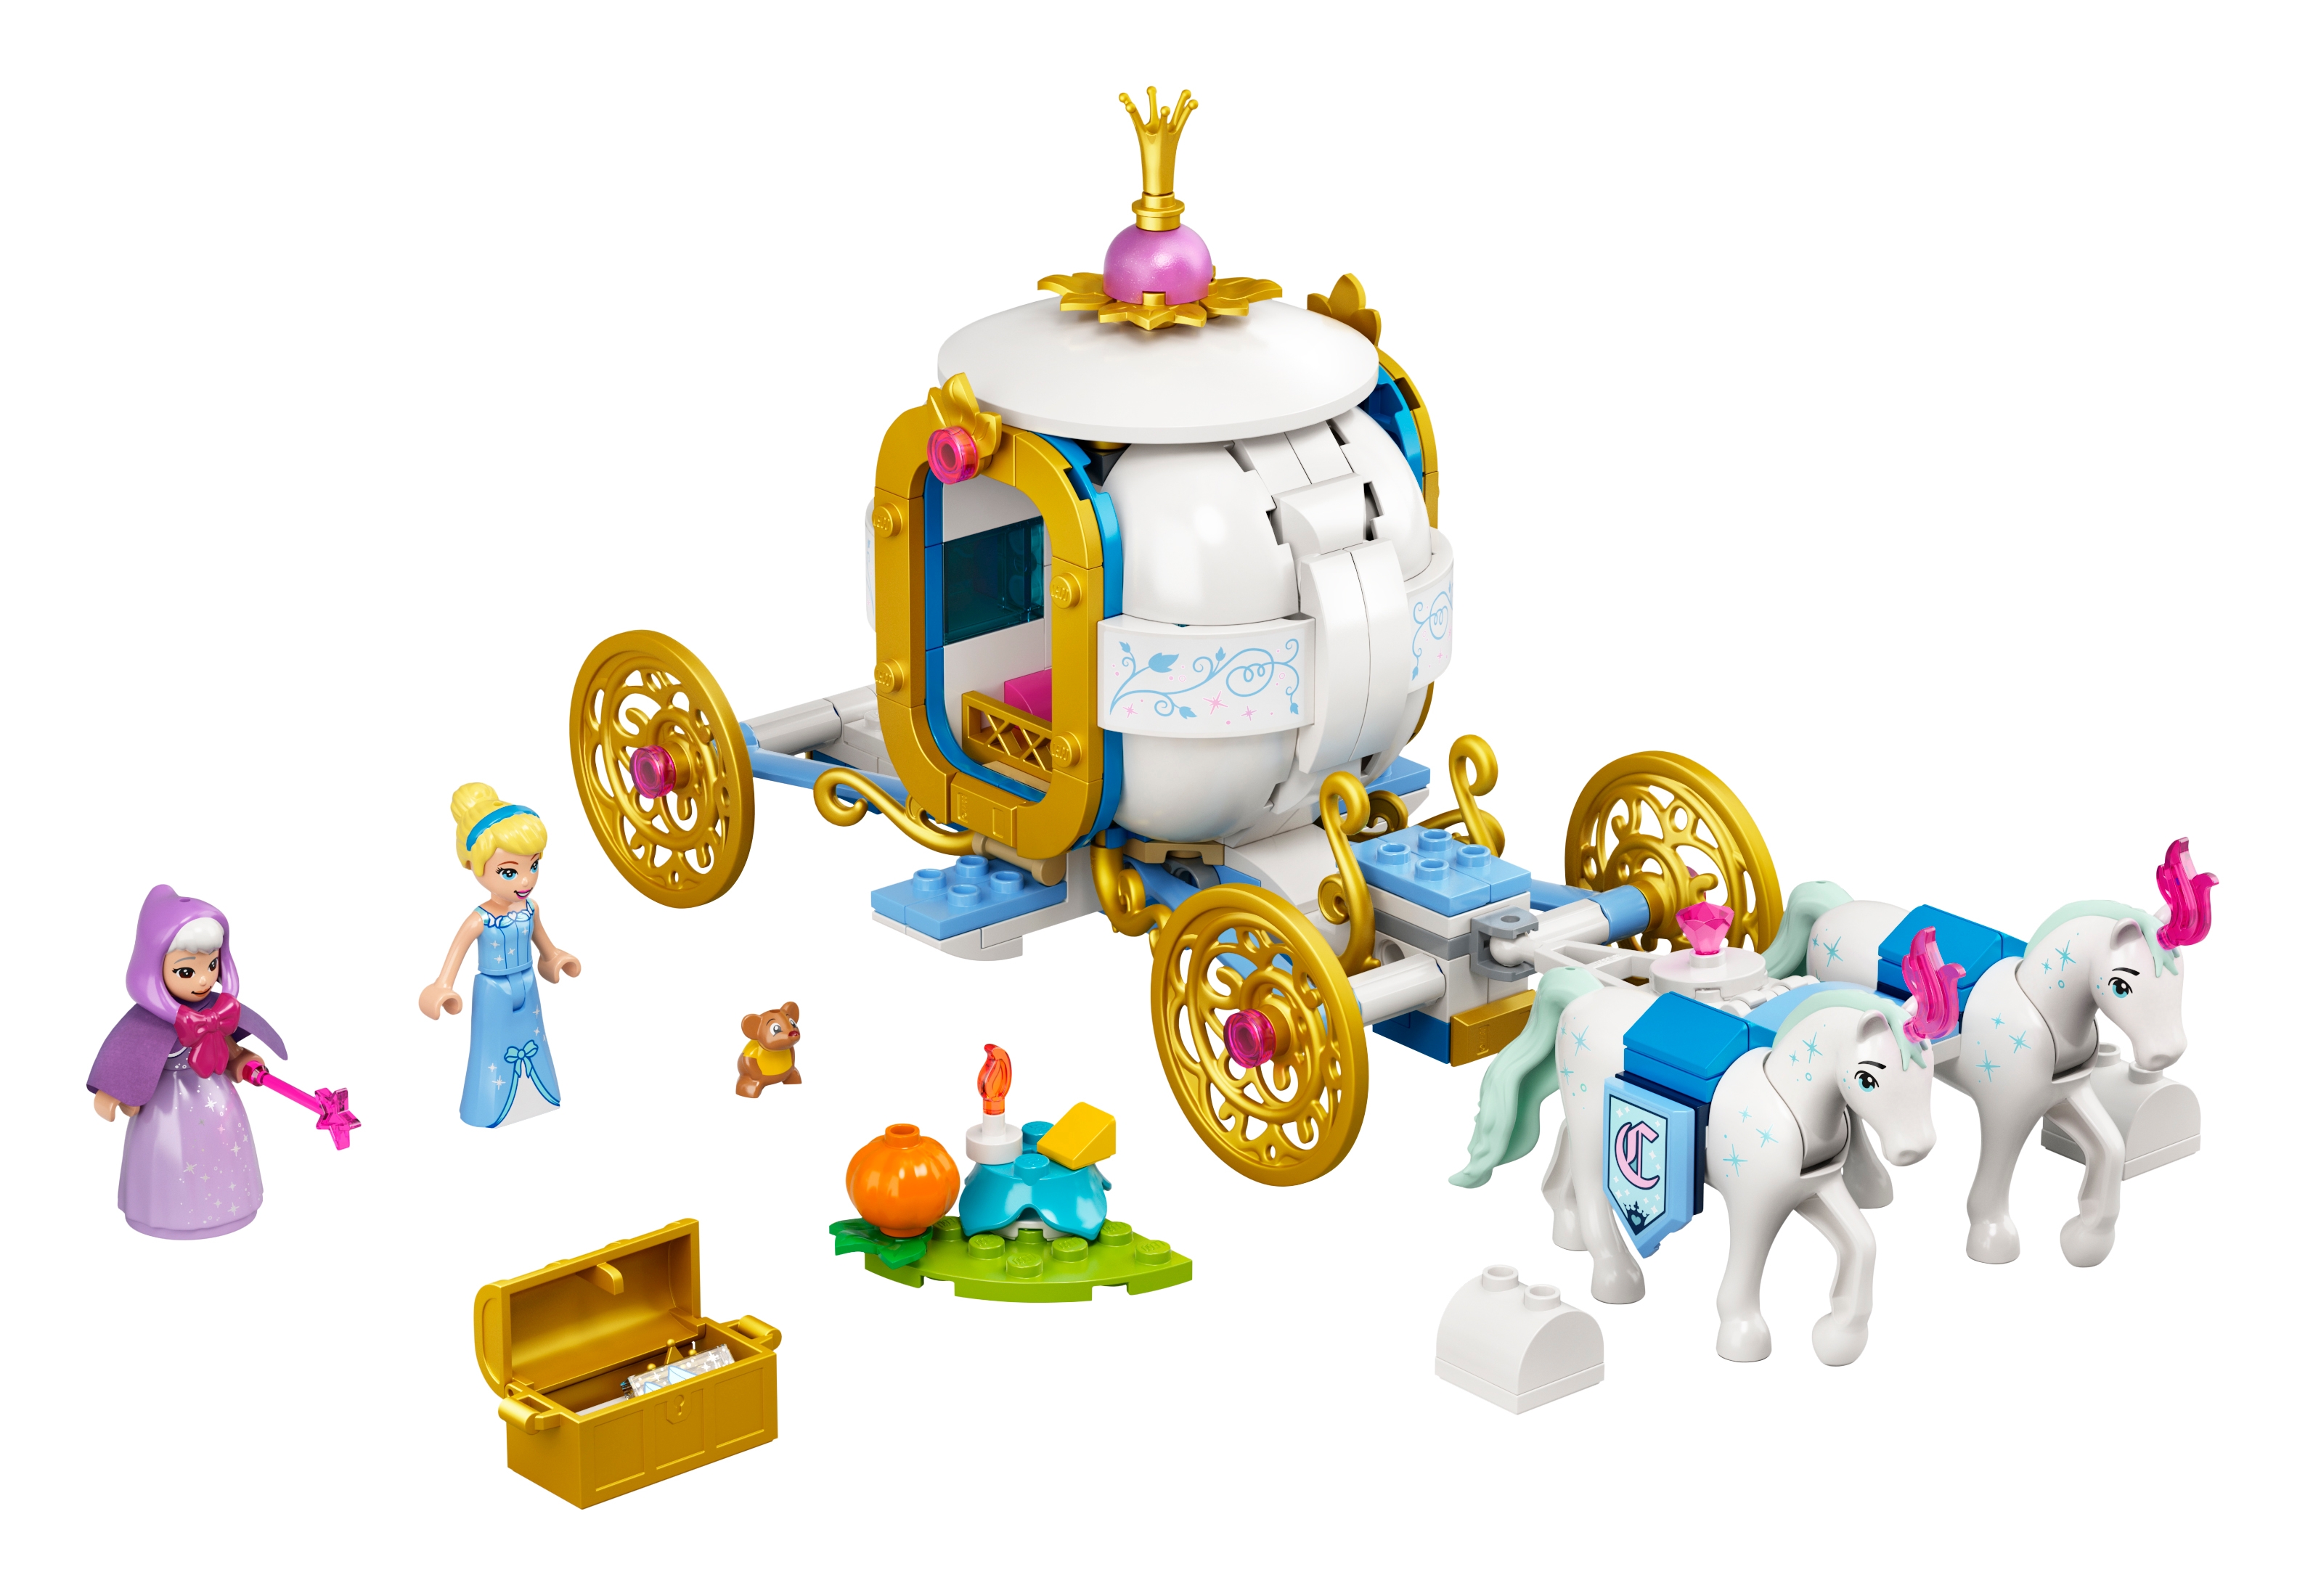 Lego Disney Cinderella's Royal Carriage